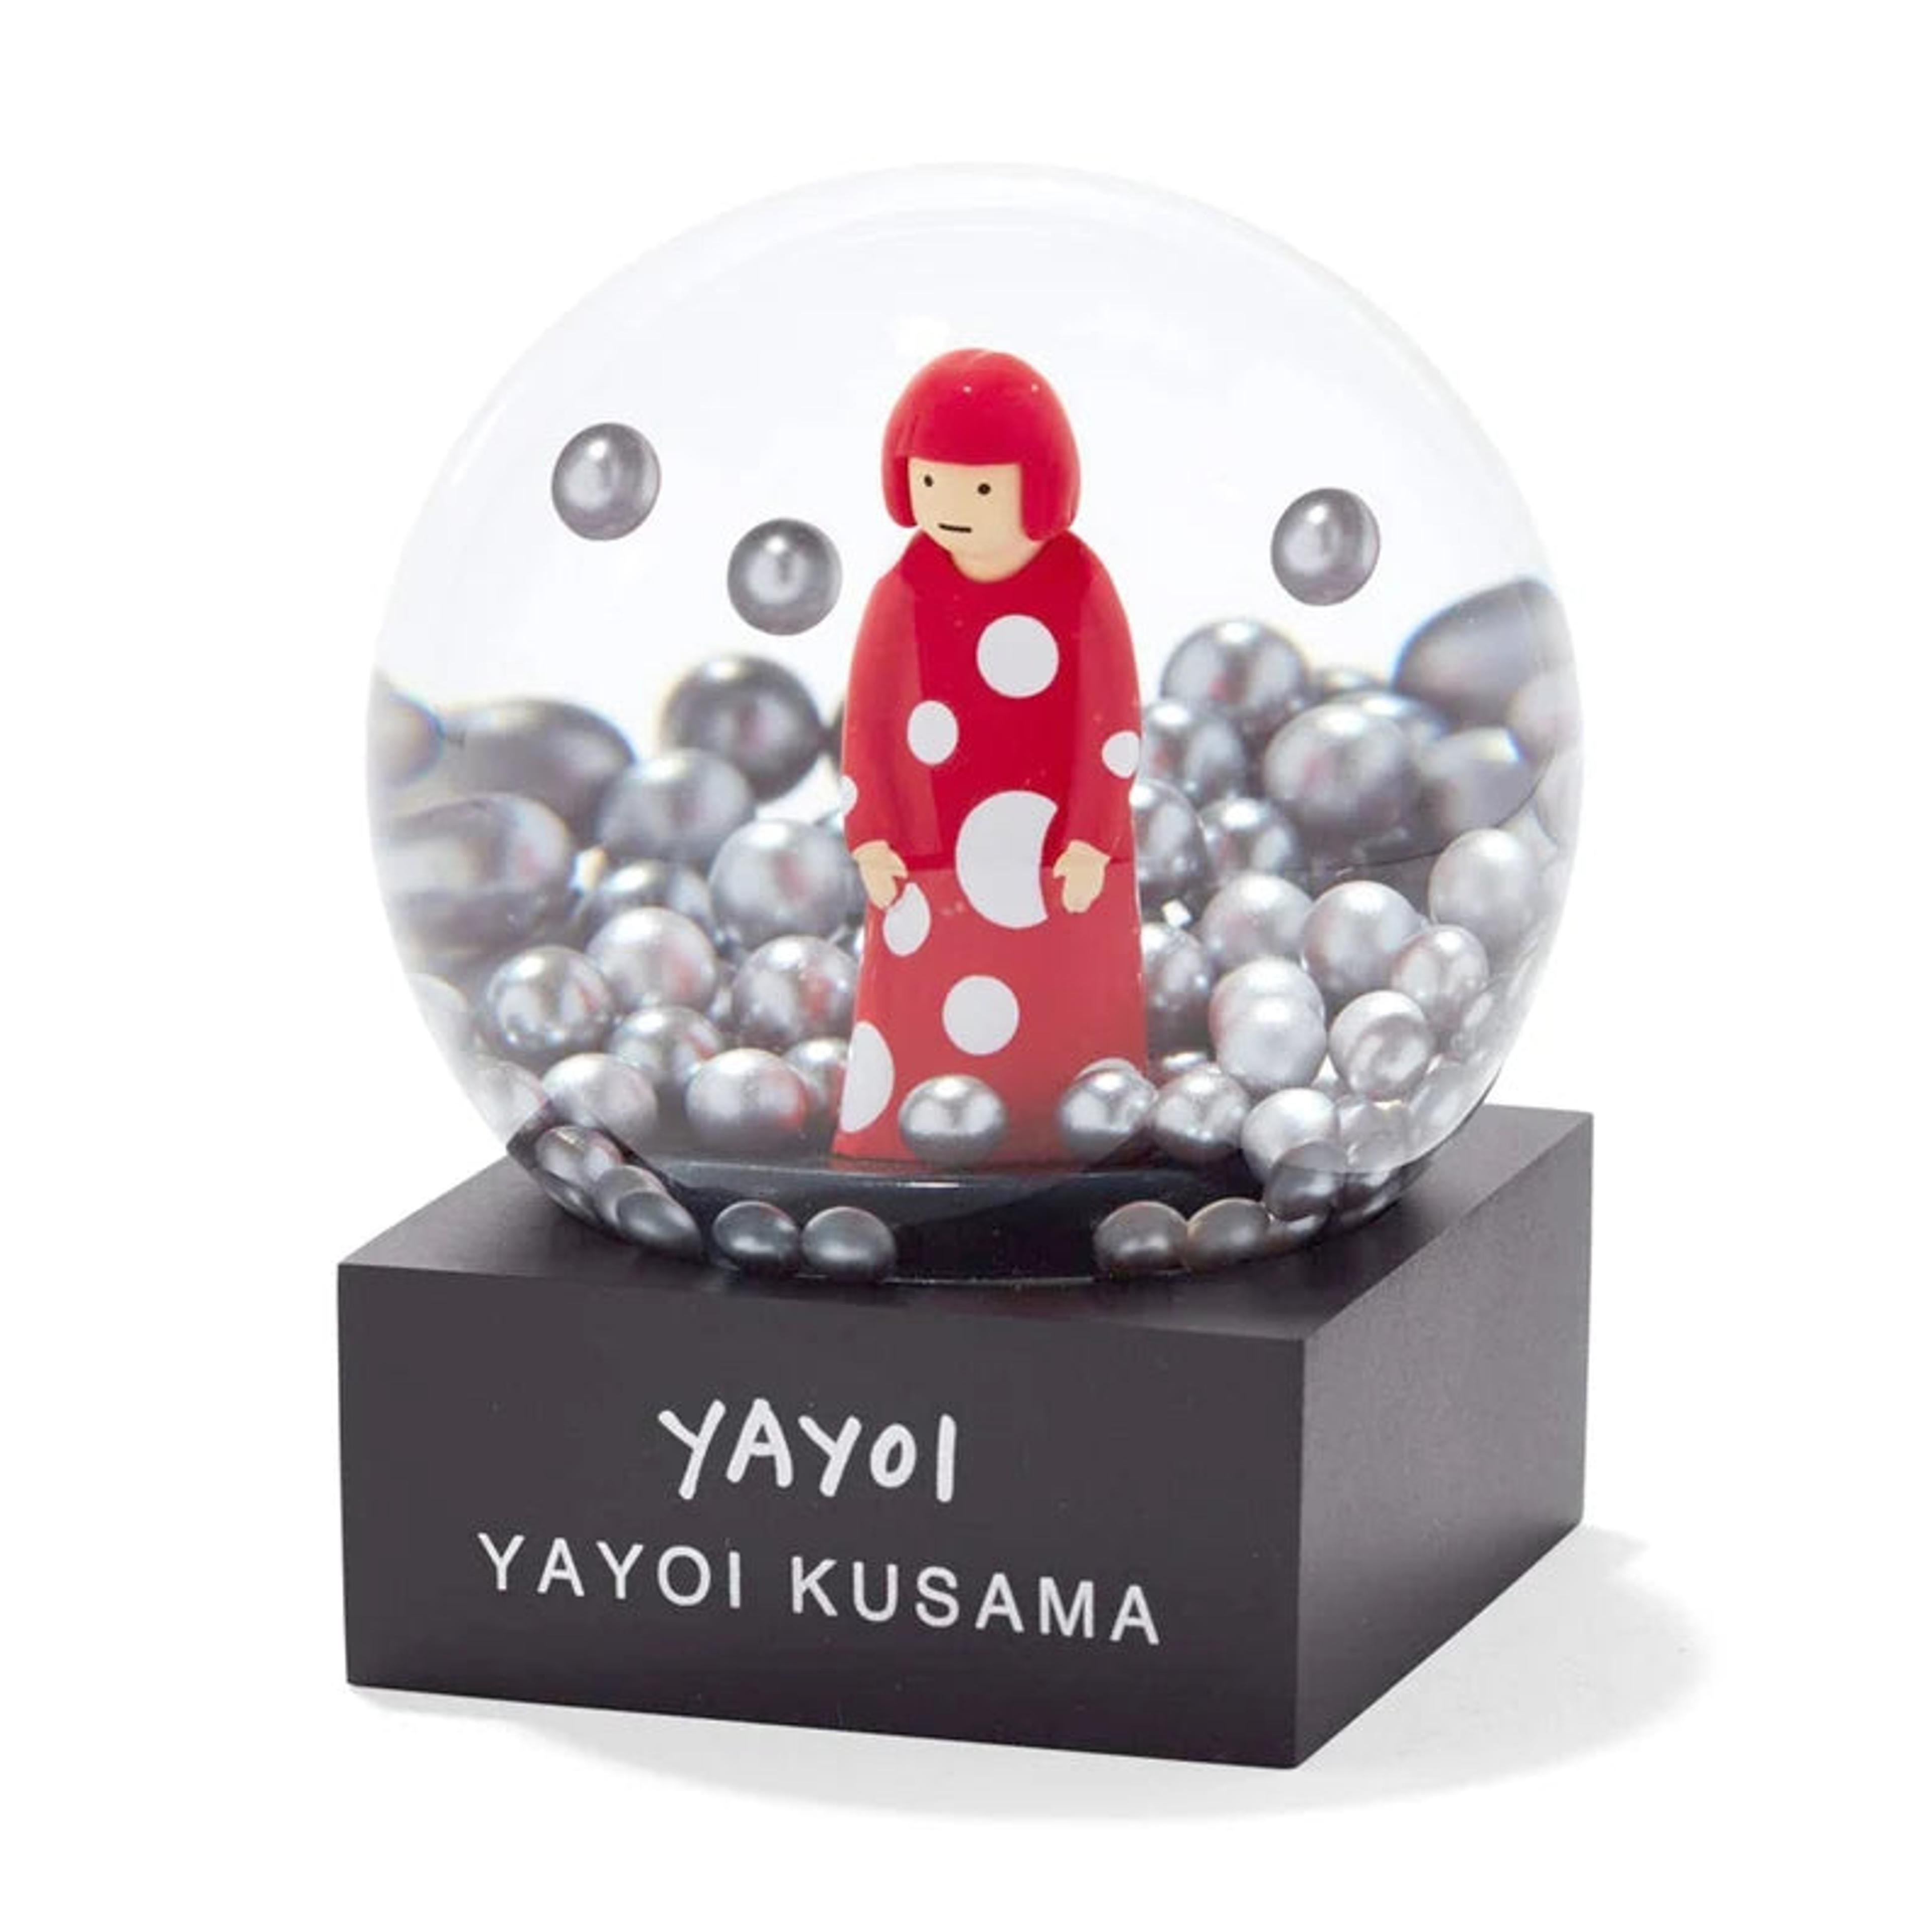 Alternate View 1 of Yayoi Kusama Snow Dome Snow Globe [YAYOI] Art Goods